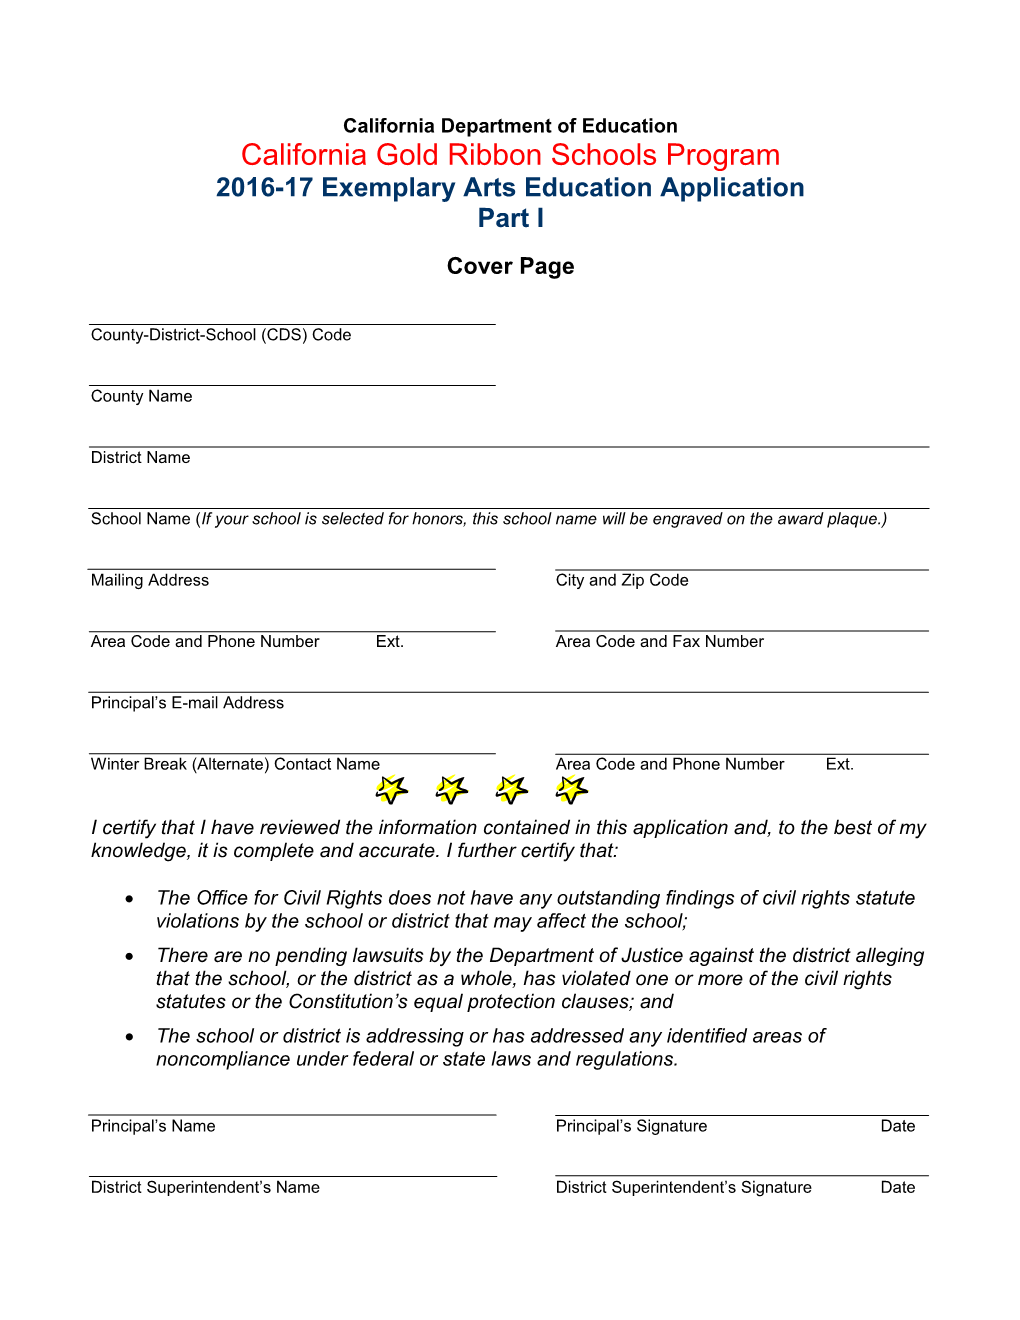 Exemplary Arts Education Application, Part I - California Gold Ribbon Schools Program (CA